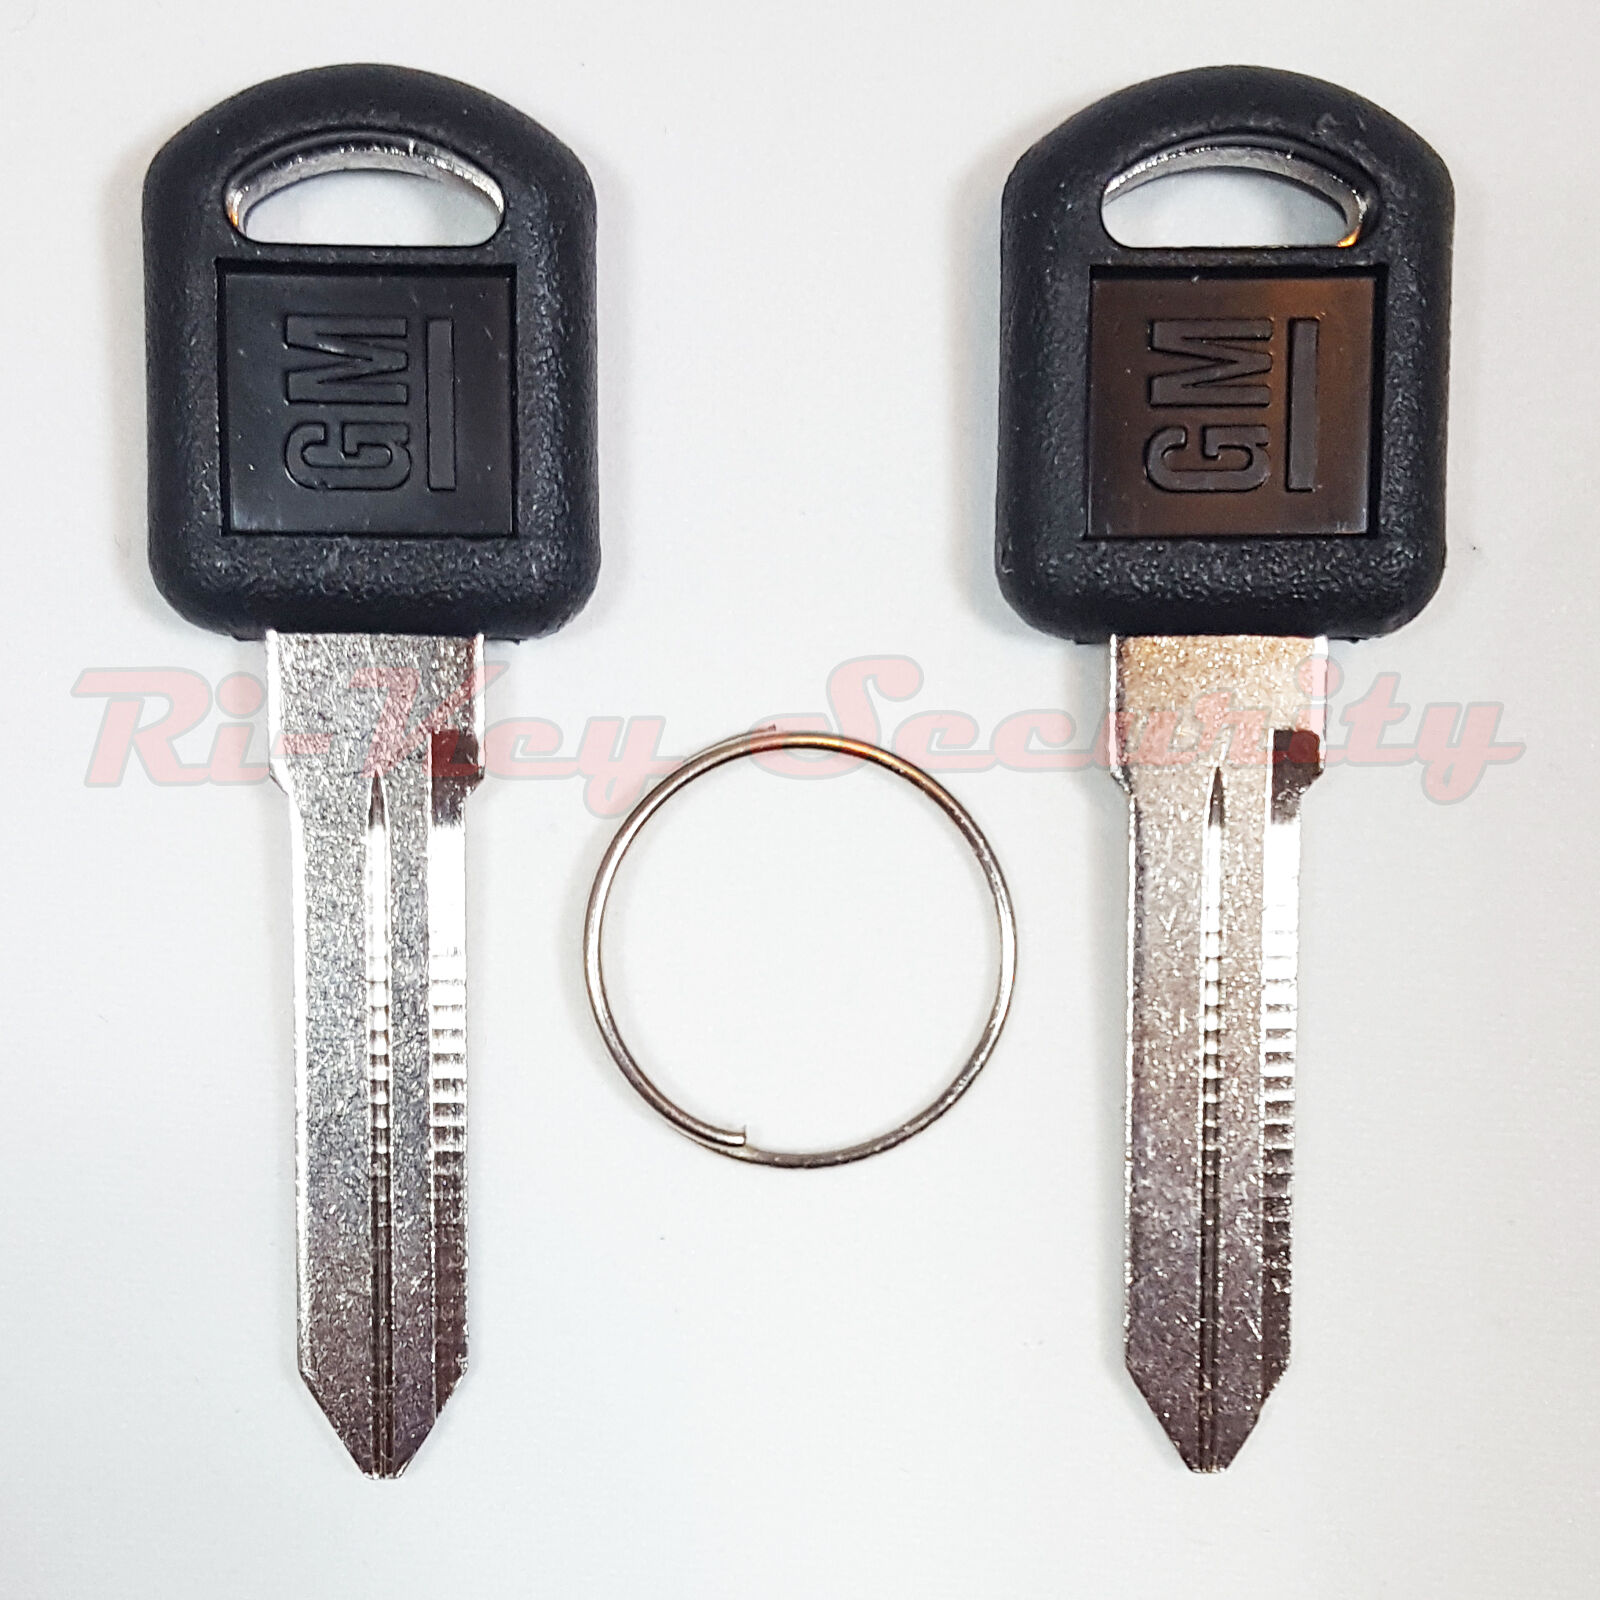 2 New original OEM Keys B89 With GM Logo GMC Chevrolet Olds' Pontiac Made In USA